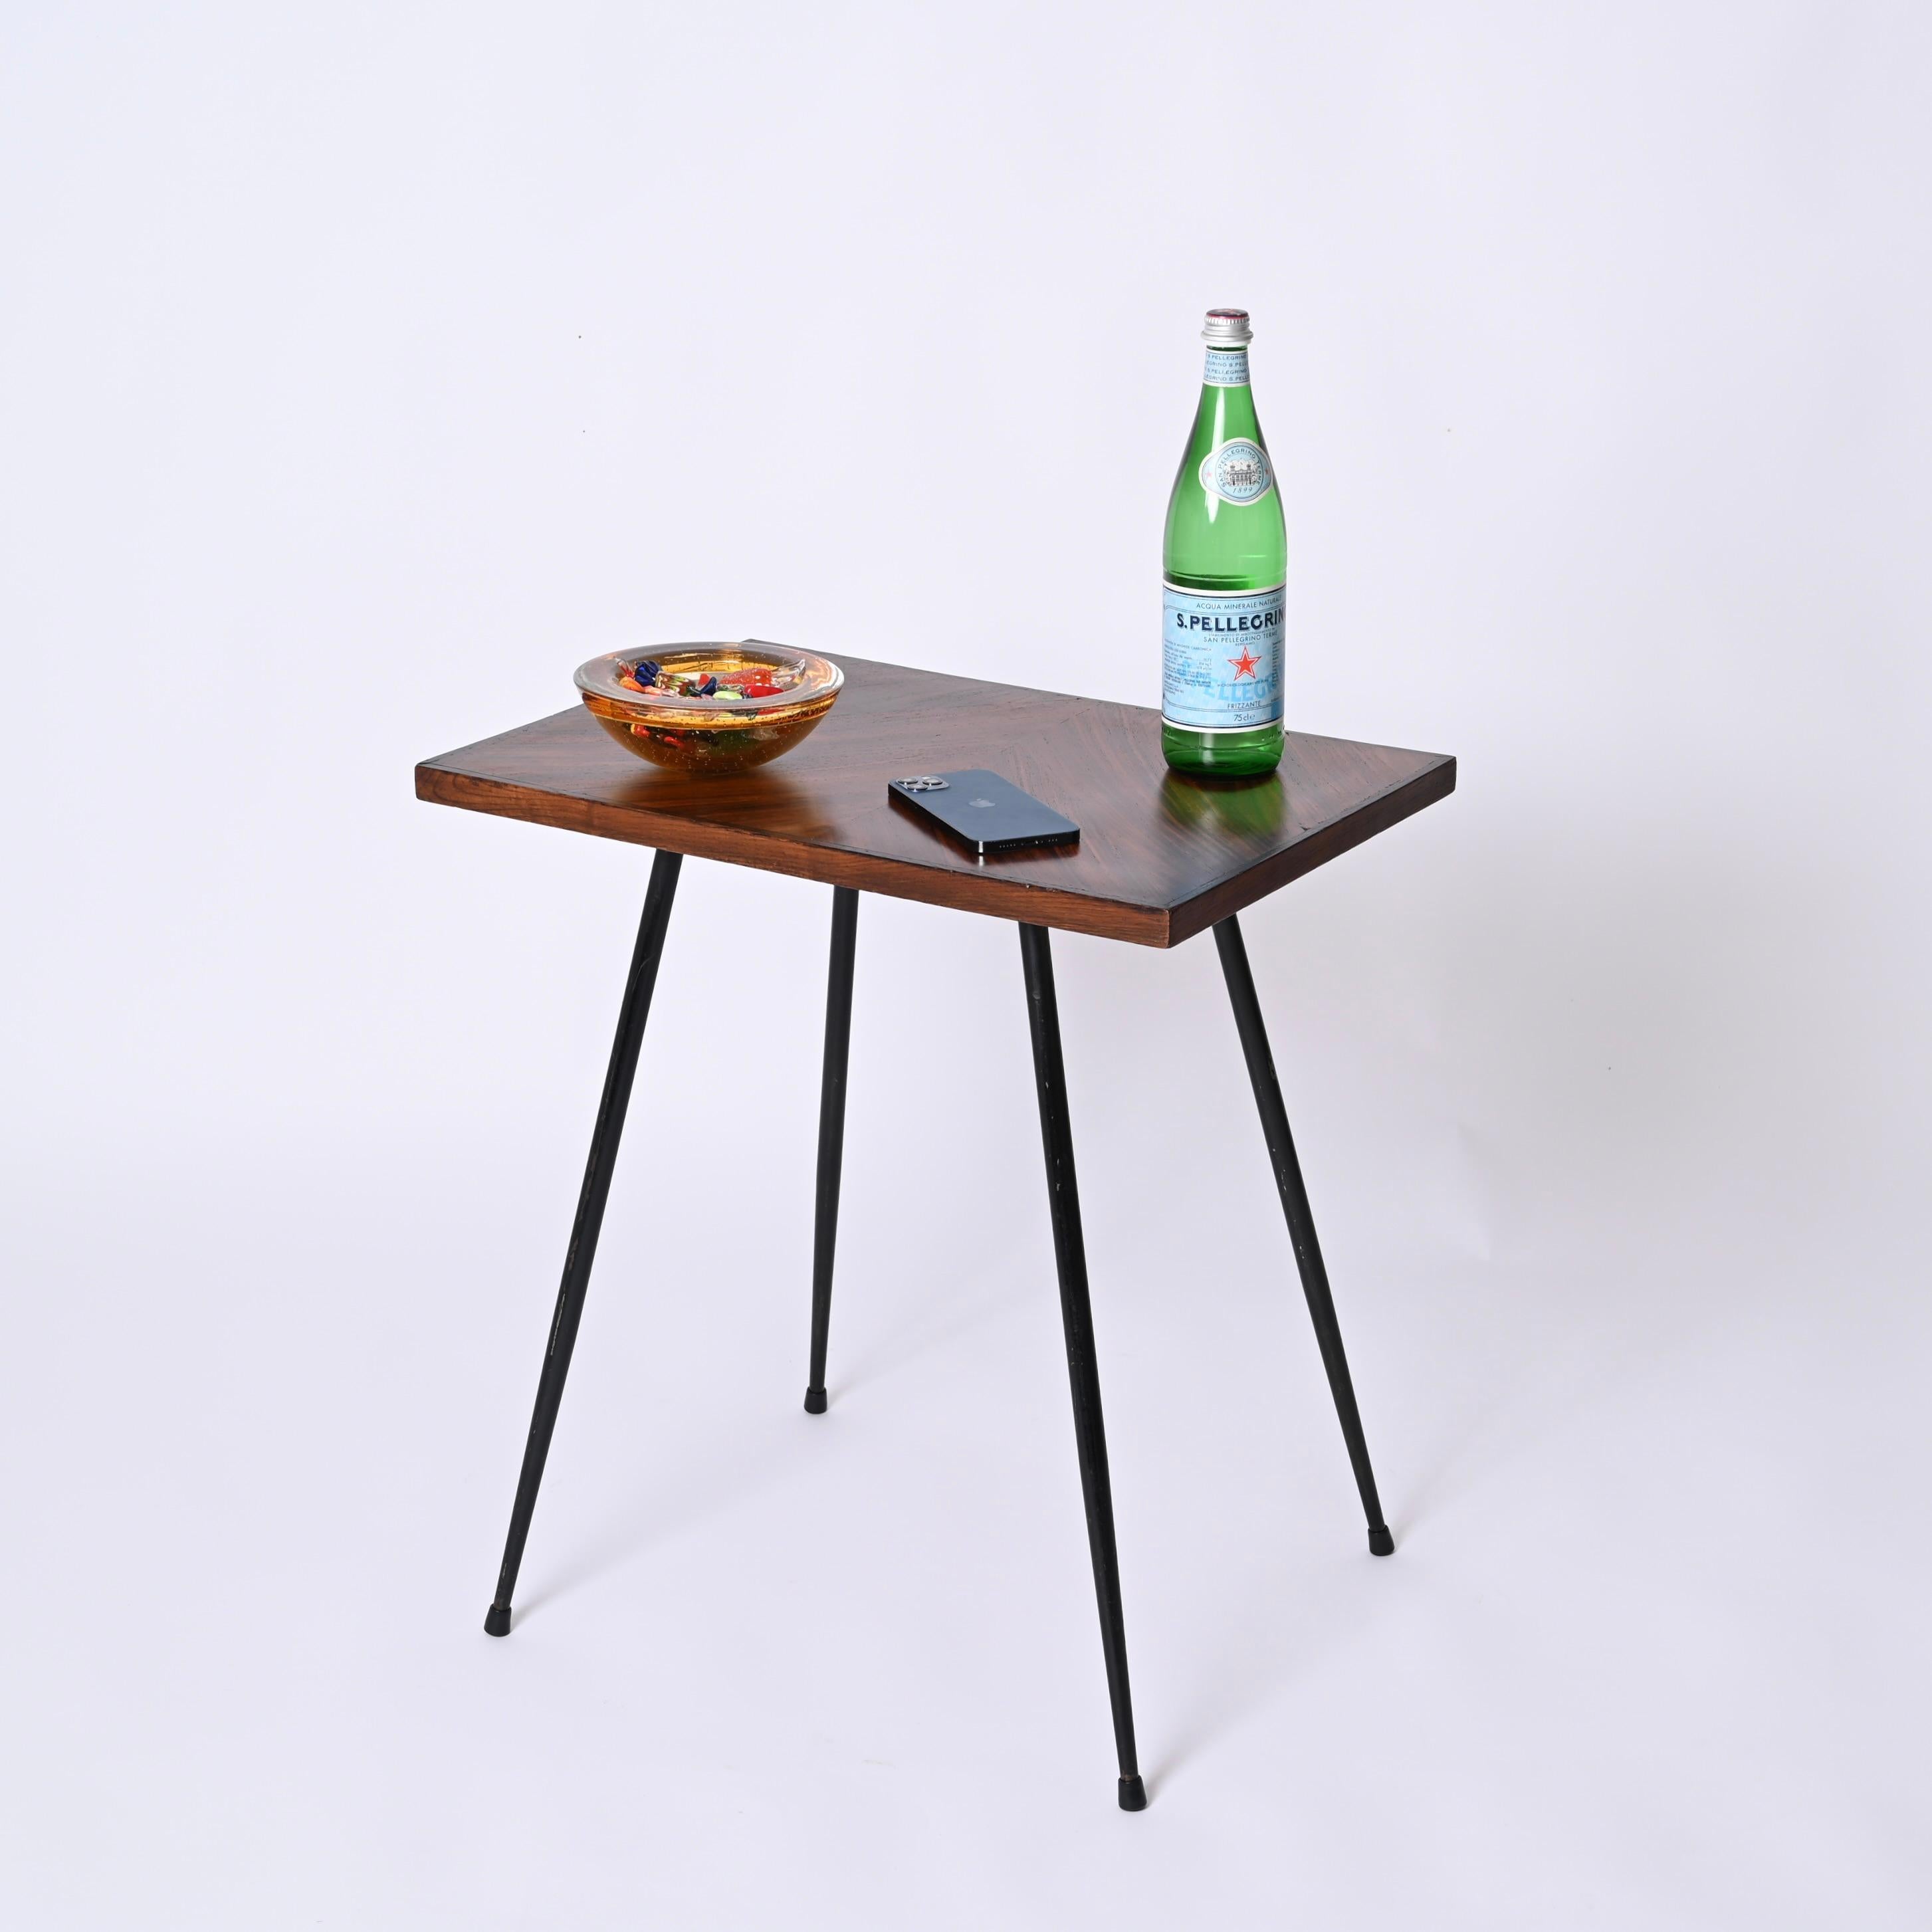 Italian Midcentury Rectangular Side Table in Teak Wood and Enameled Metal, 1950s For Sale 2